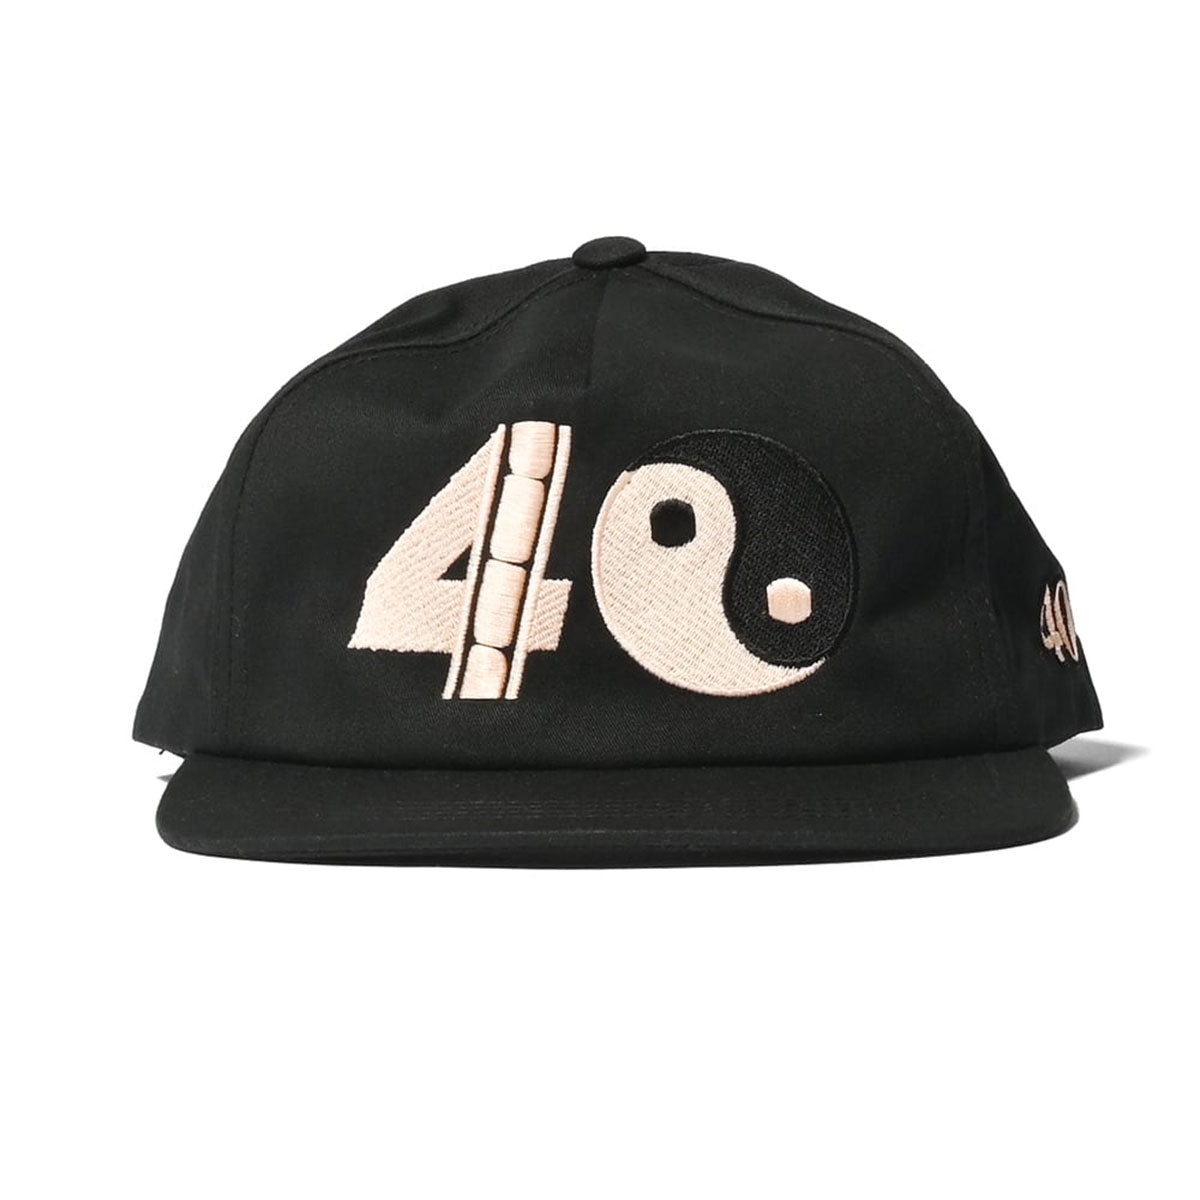 40 NEW YORK - YING YANG LOGO CAP